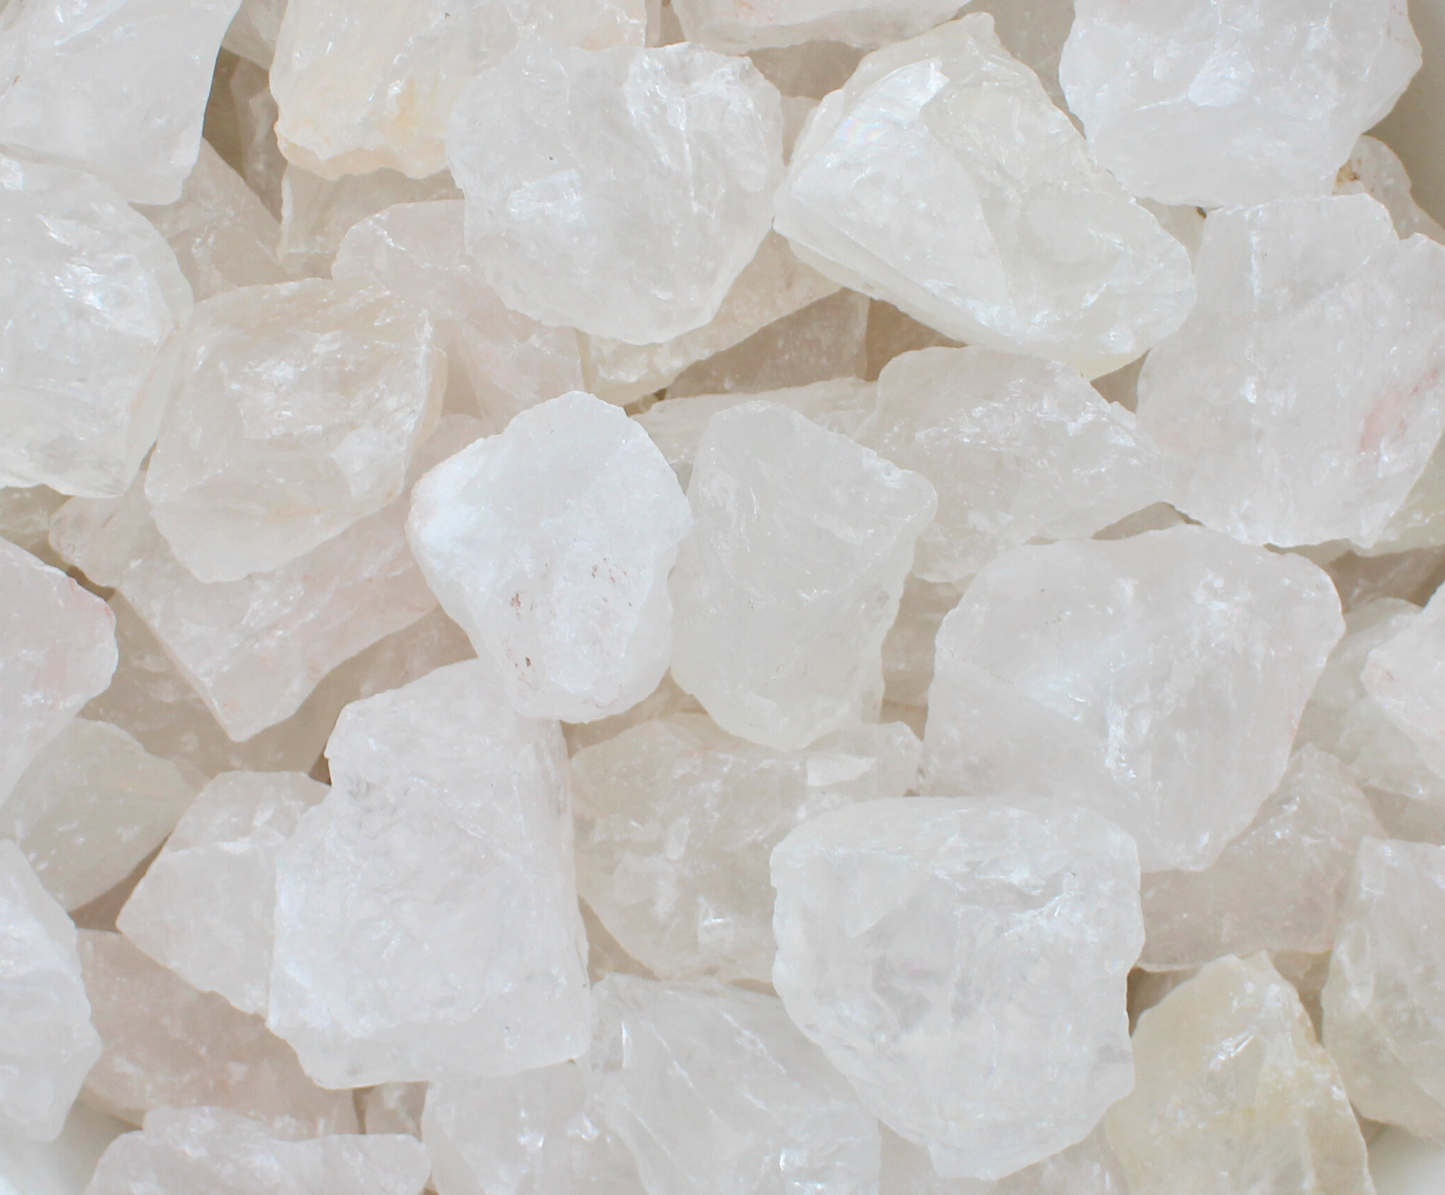 Girasol Opal "Milky Quartz" | Tumbling Rough Rocks | 2" - 3" Raw Crystals